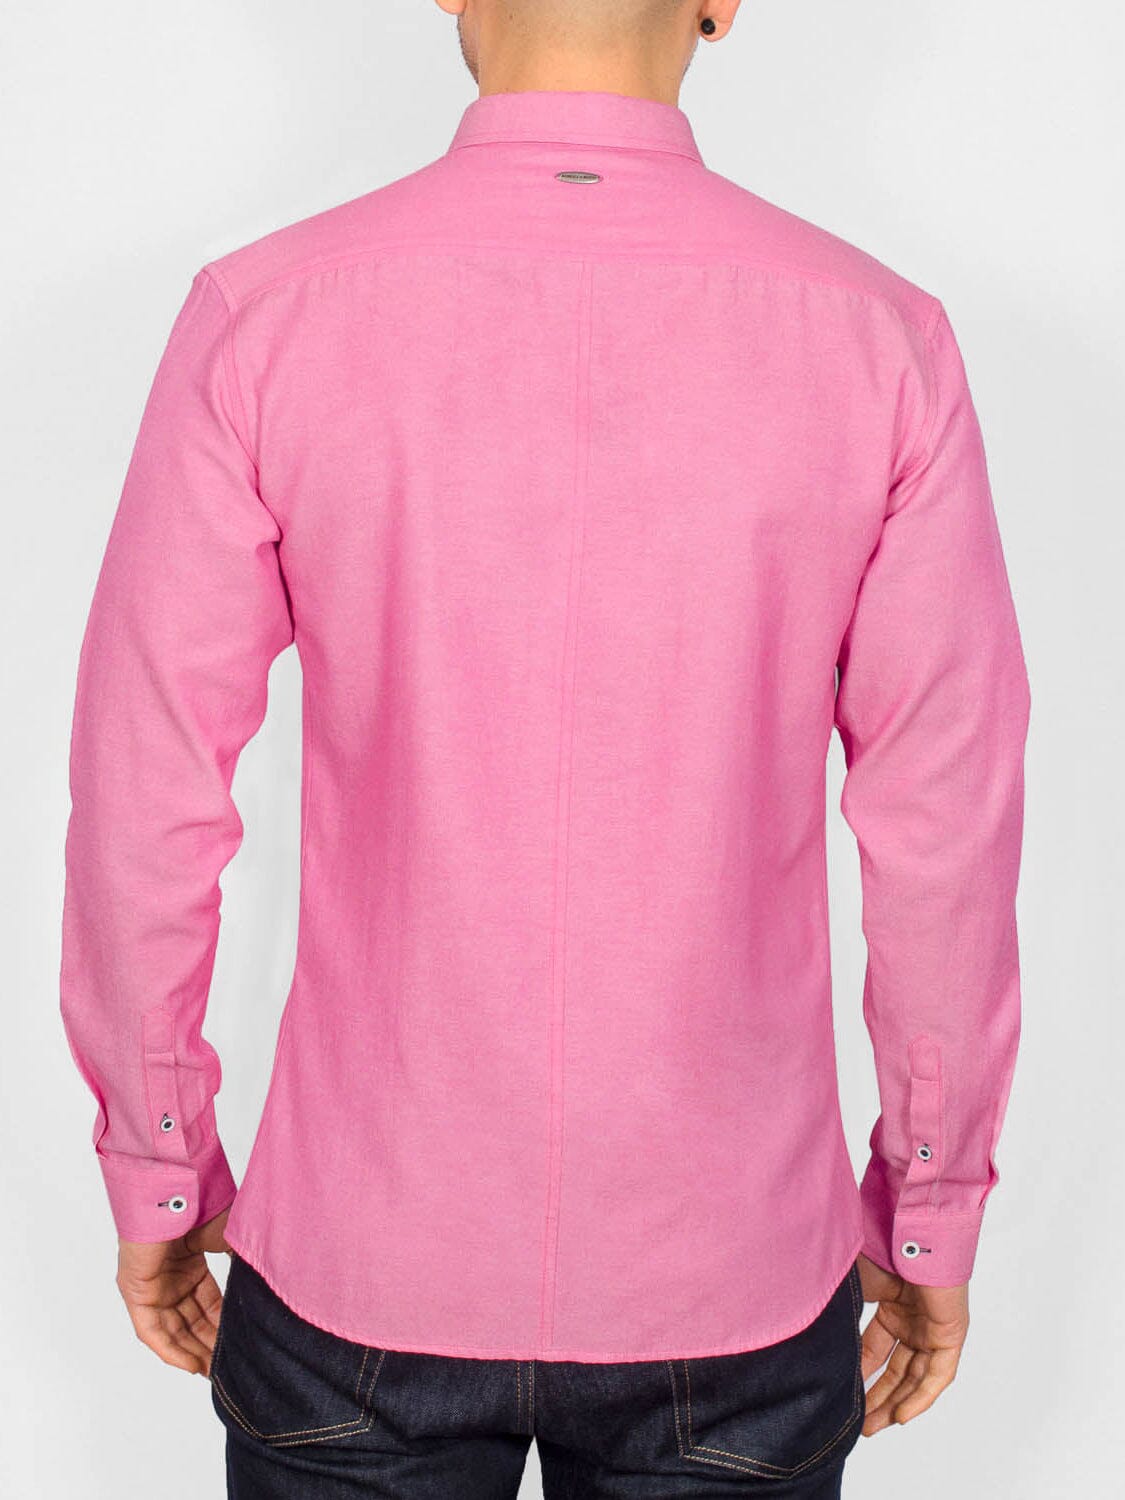 Bewley & Ritch - Aland Shirt Hot Pink